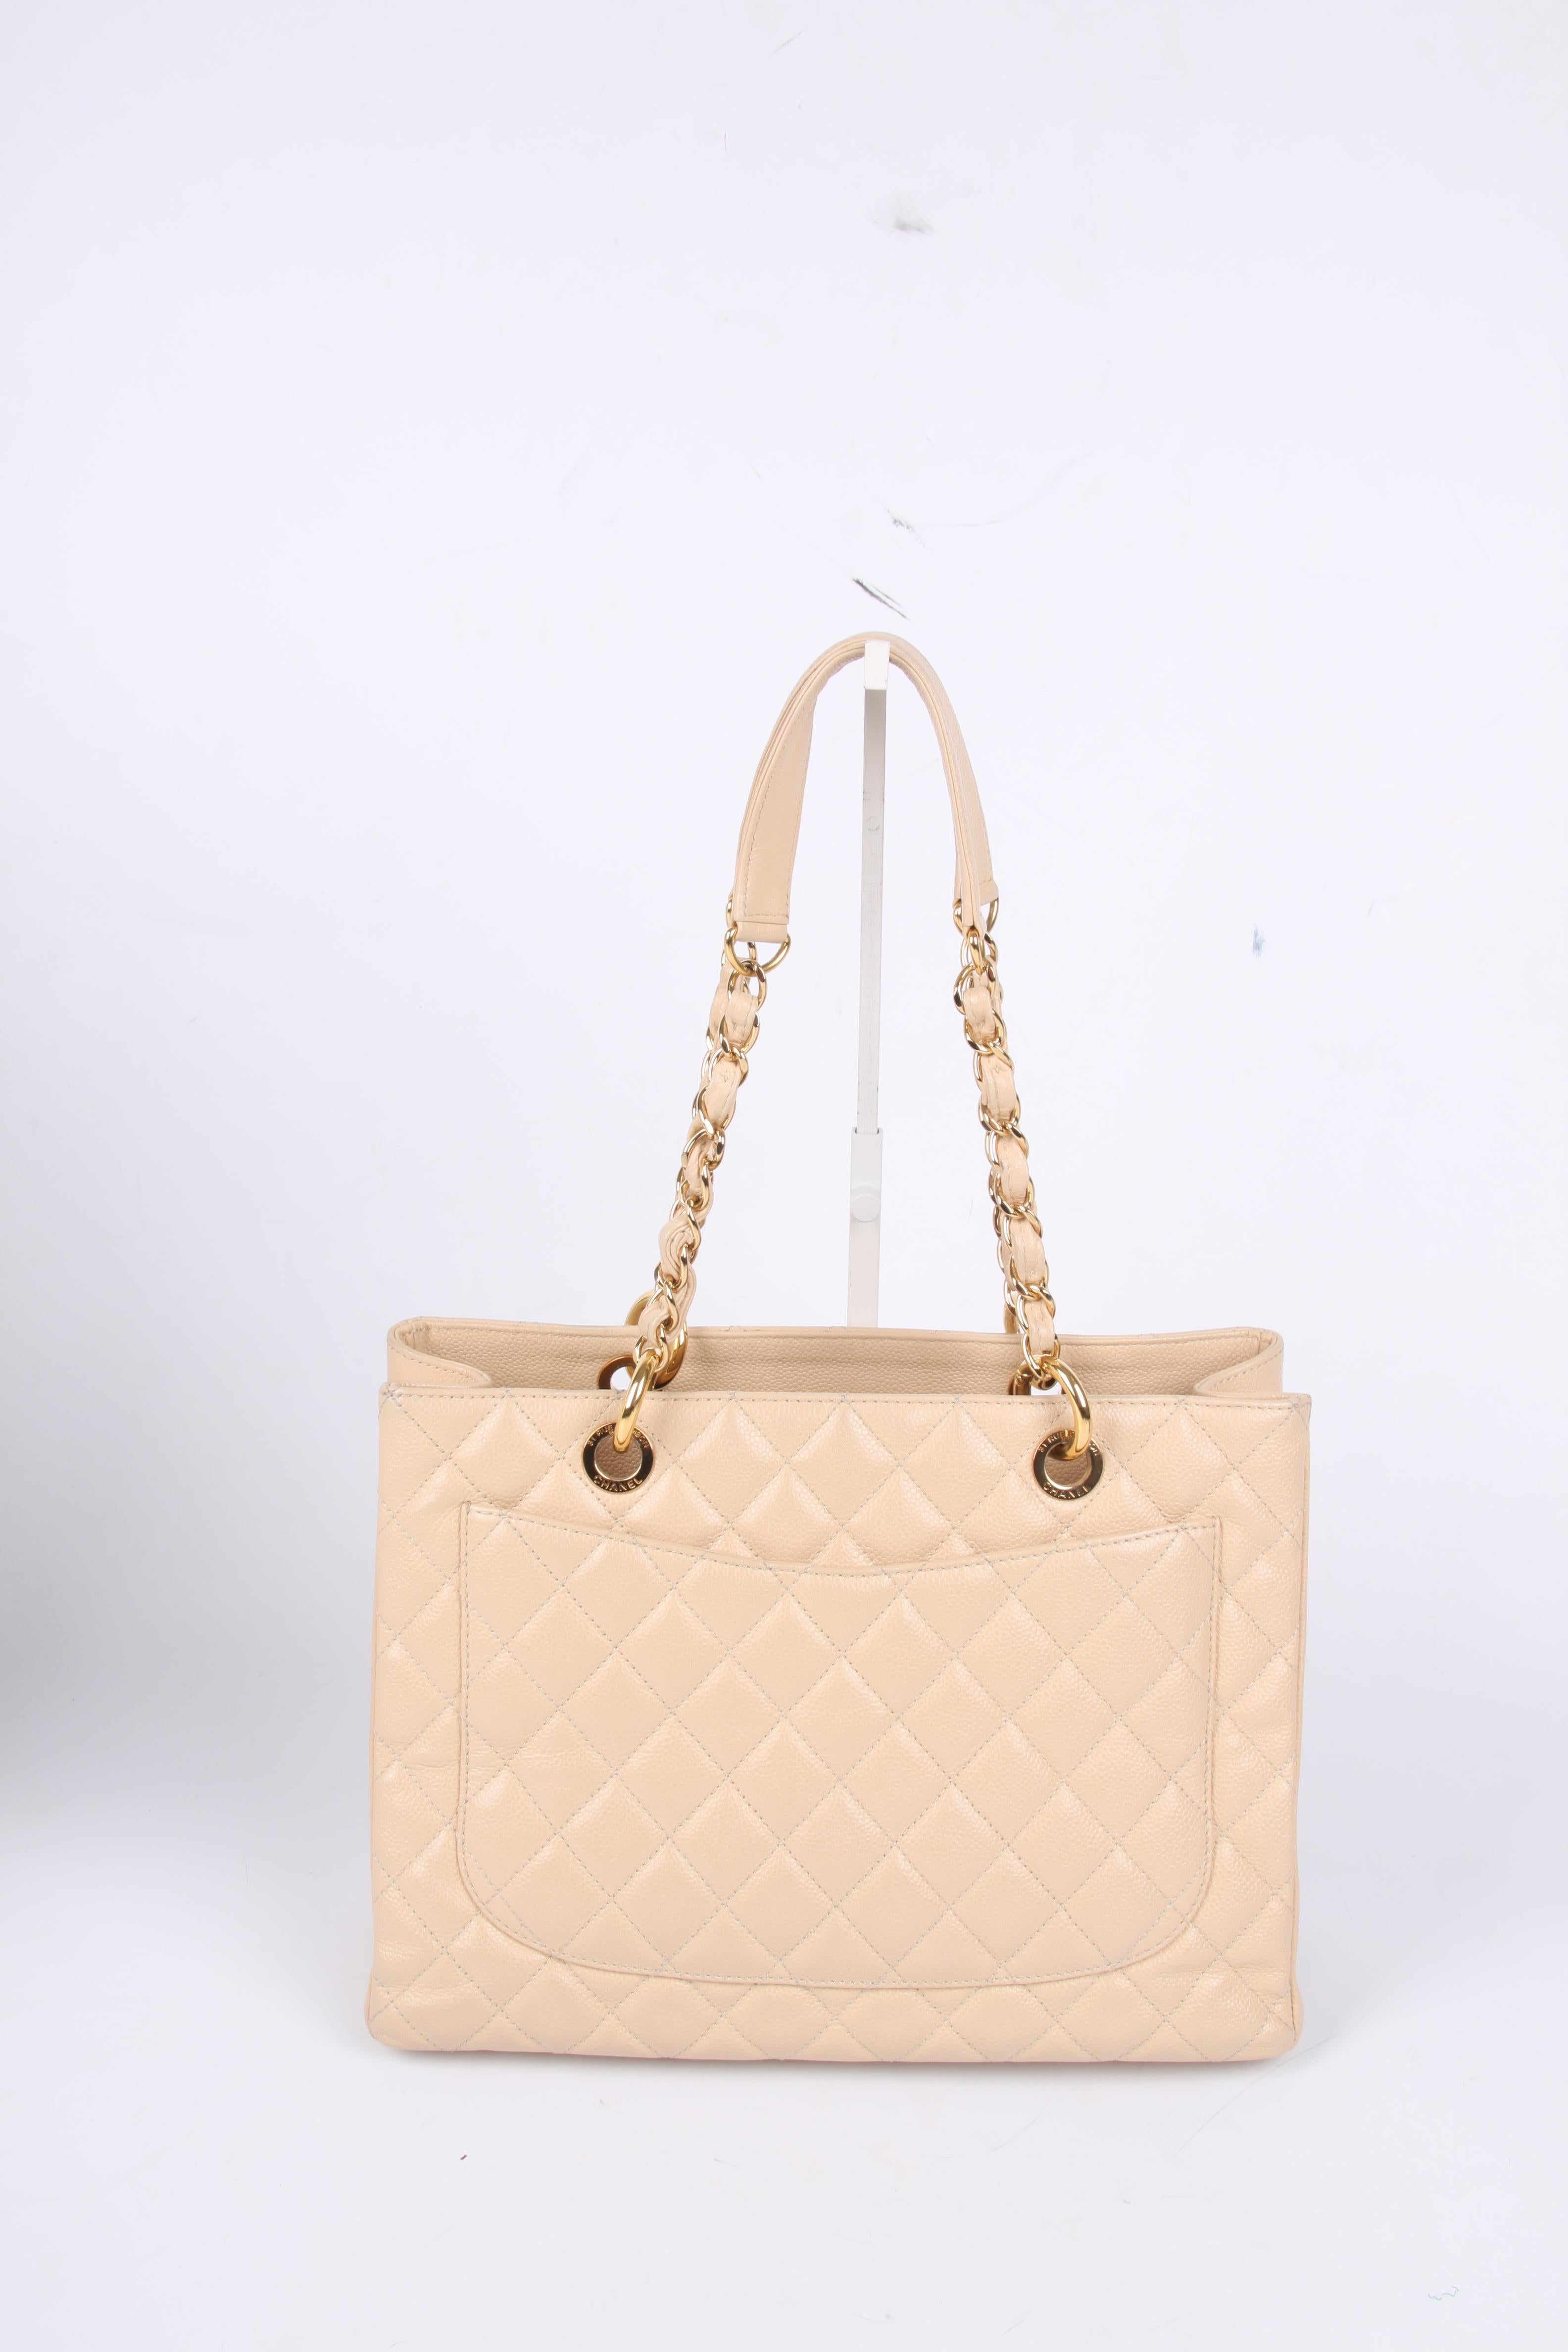   Chanel Grand Shopper Bag - beige caviar leather    For Sale 1